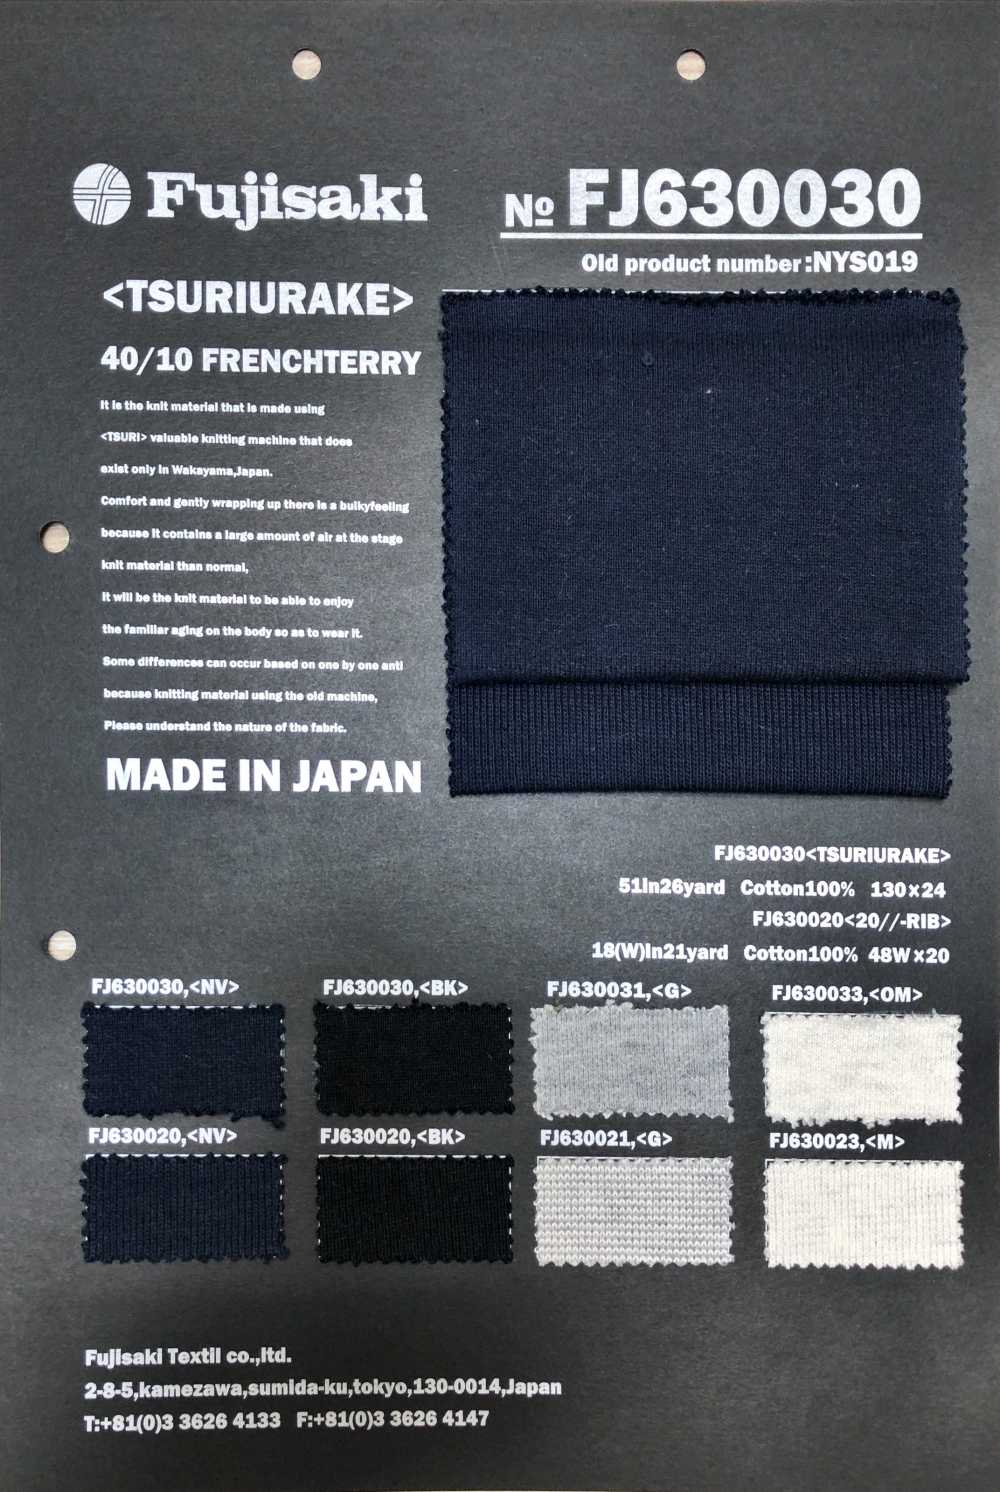 FJ630021 20//- Rippstrick-Heather[Textilgewebe] Fujisaki Textile